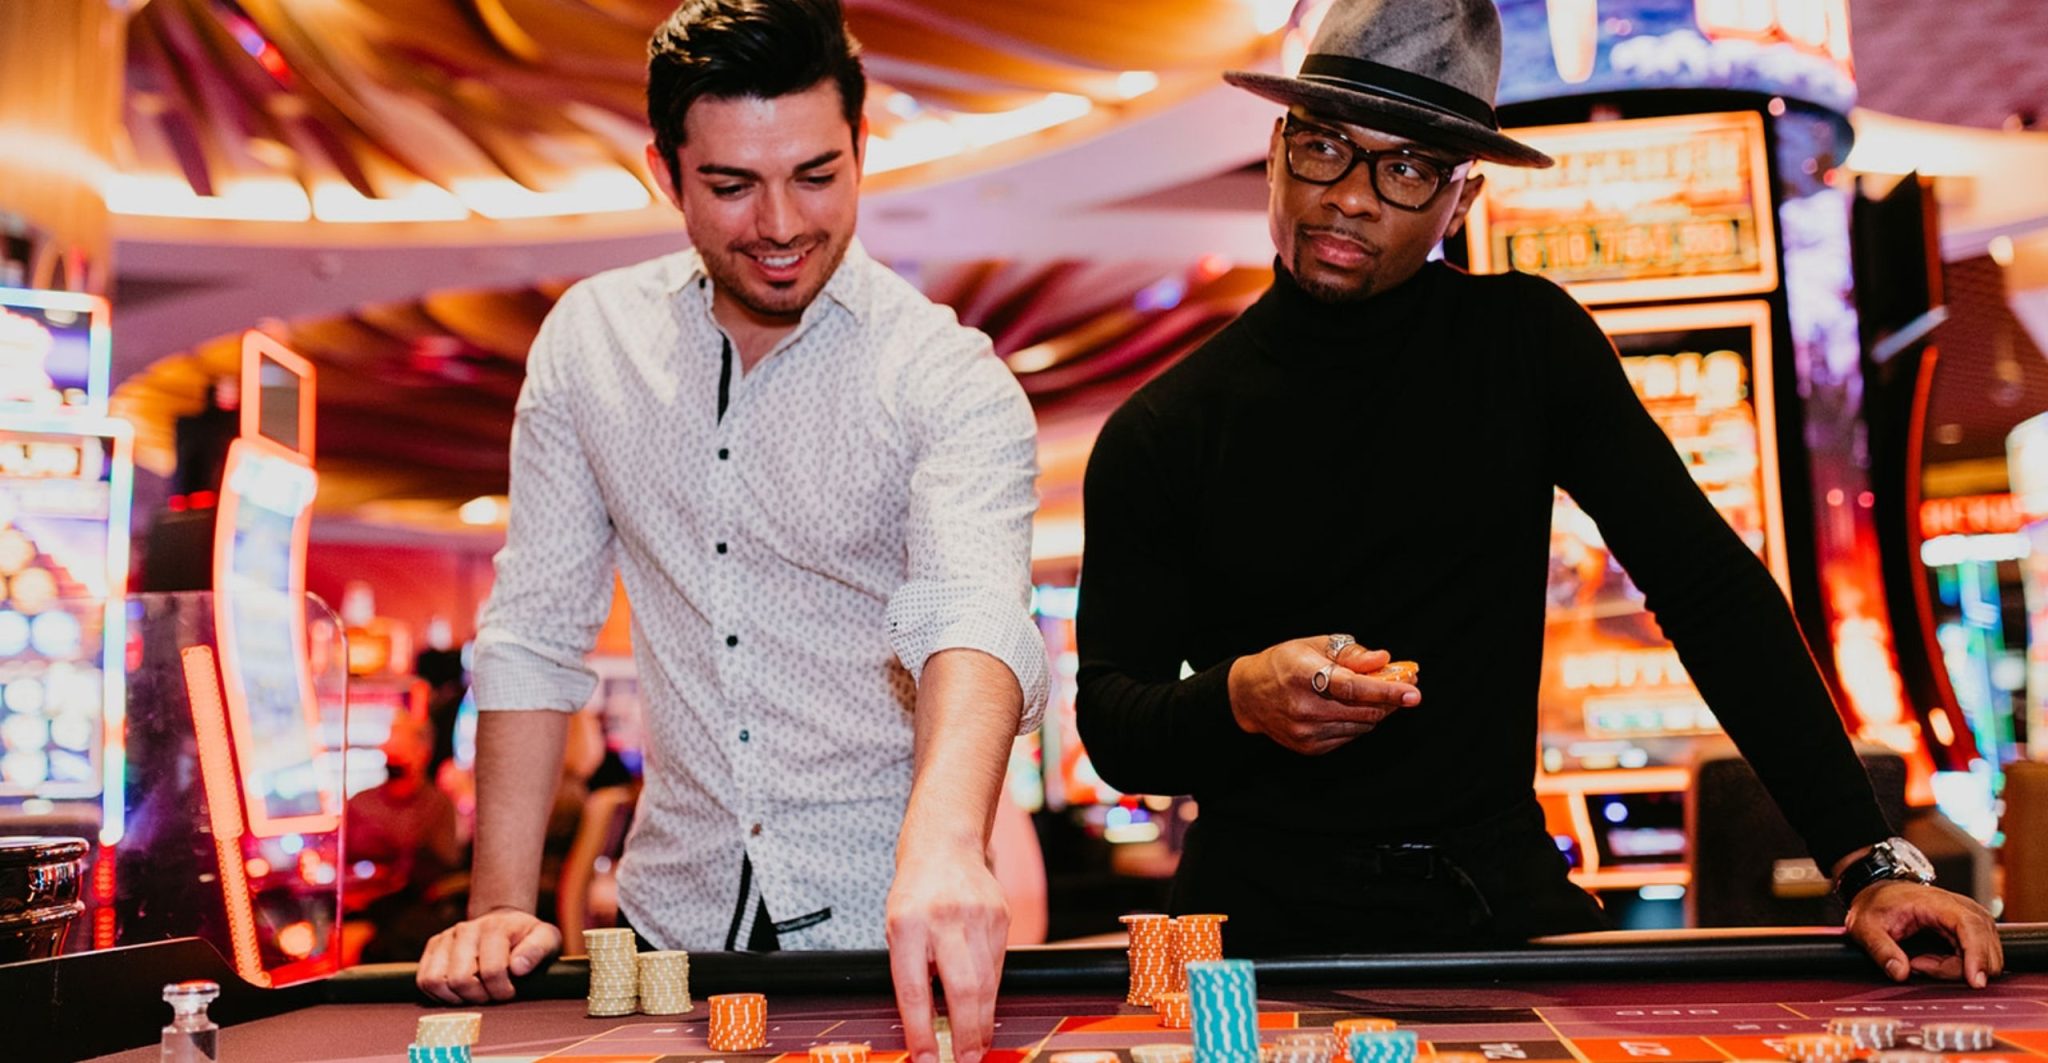 How to Avoid Hazards In Casino Games?